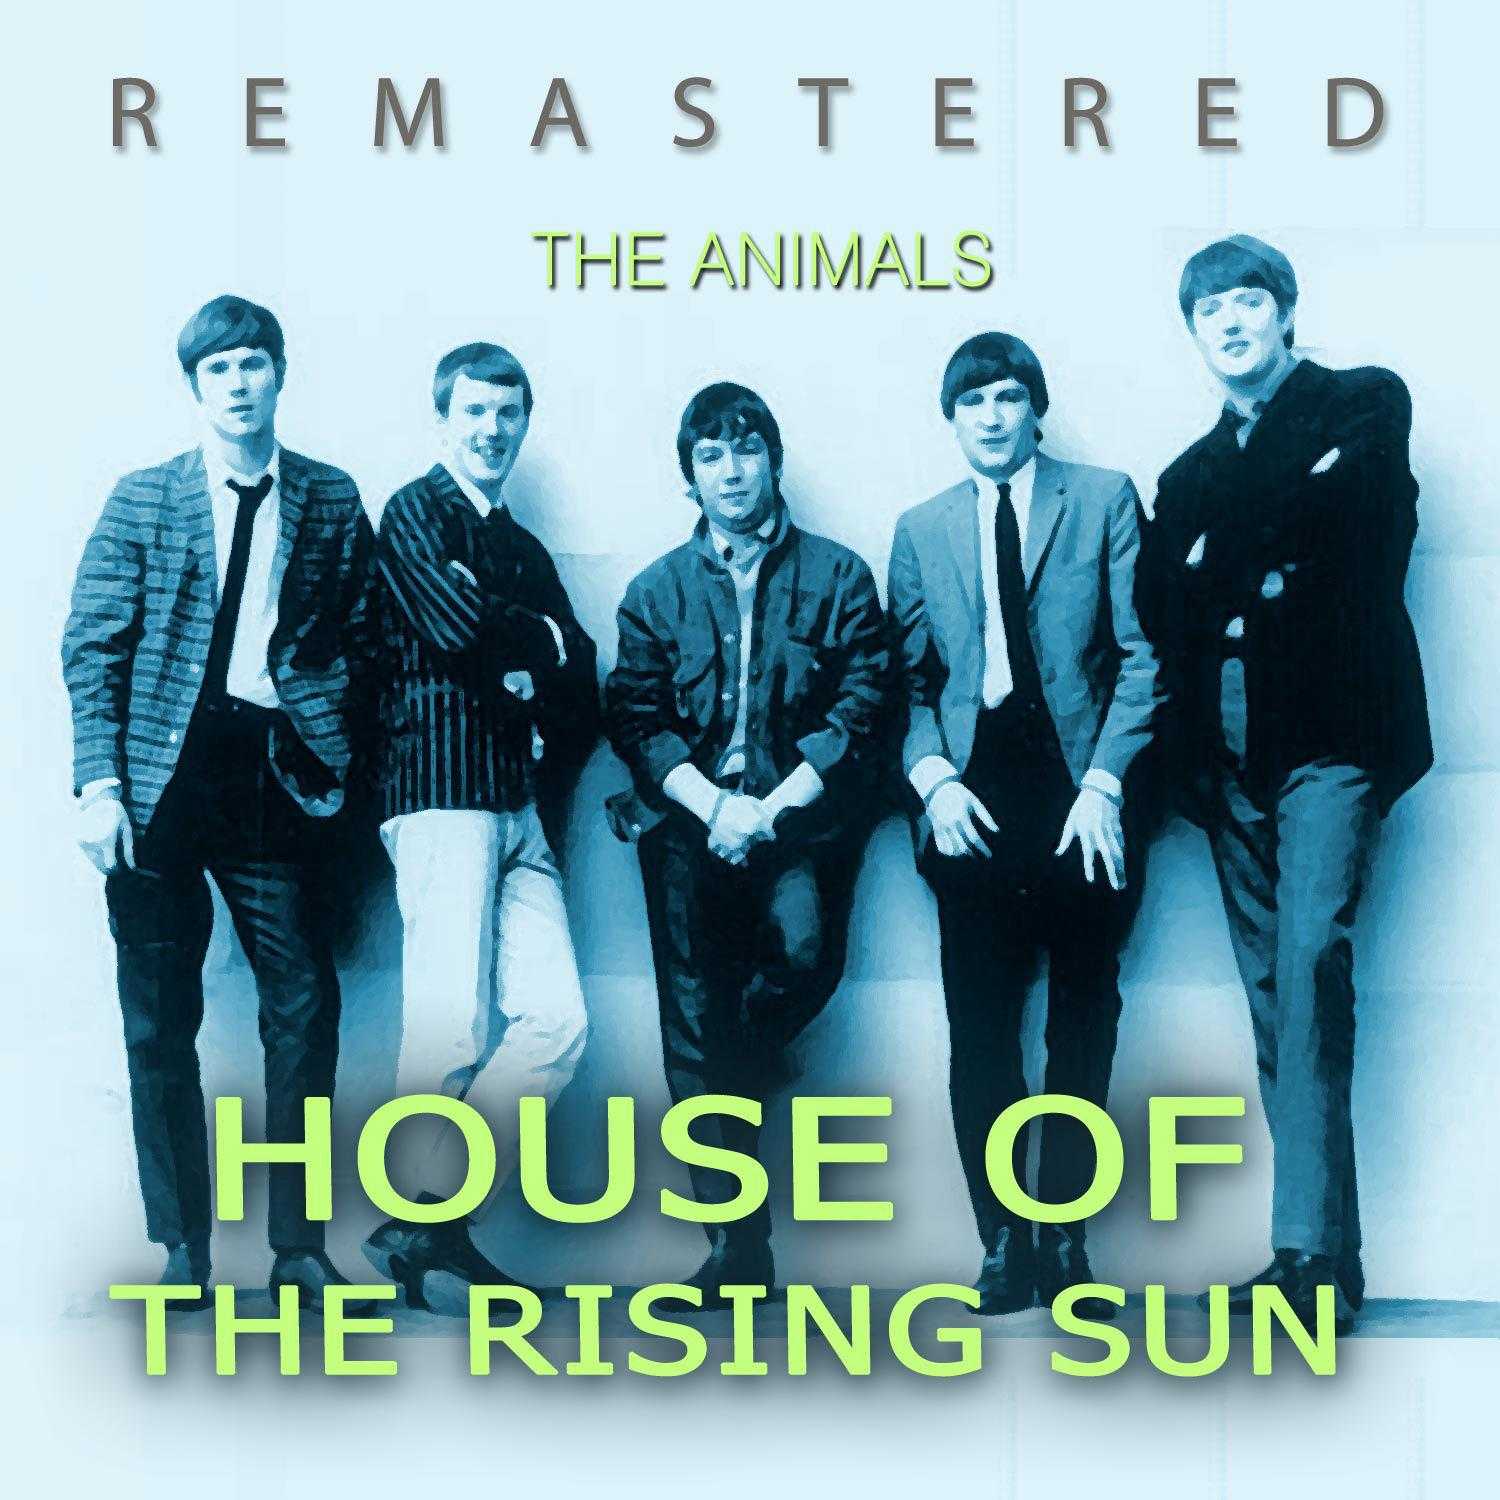 Animals house перевод. Animals the House of the Rising Sun альбом. The animals House of the Rising Sun обложка. Animal House. Группа the animals дом восходящего солнца.